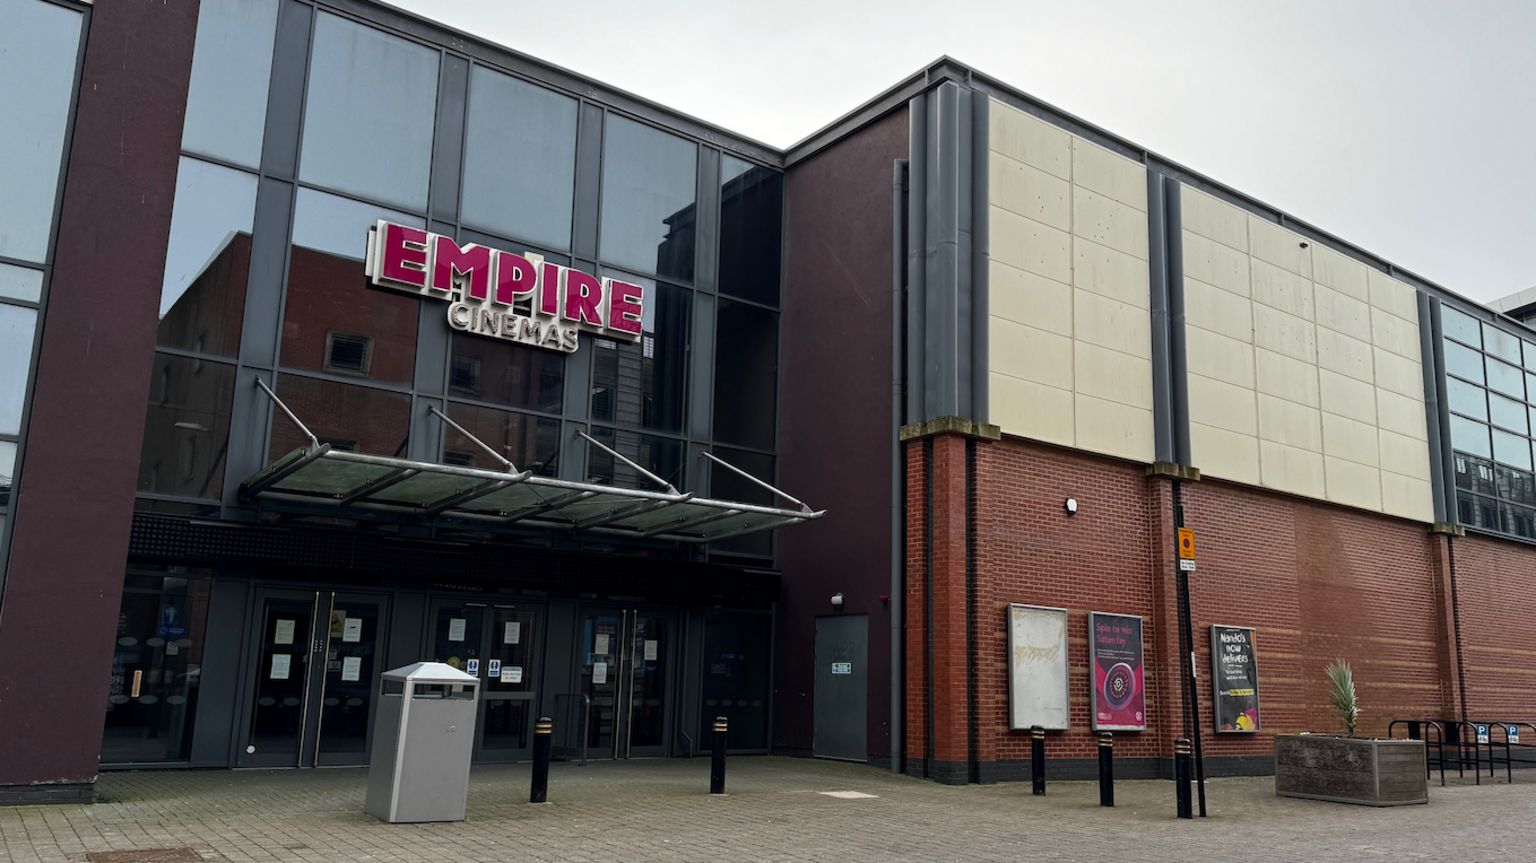 Empire cinema